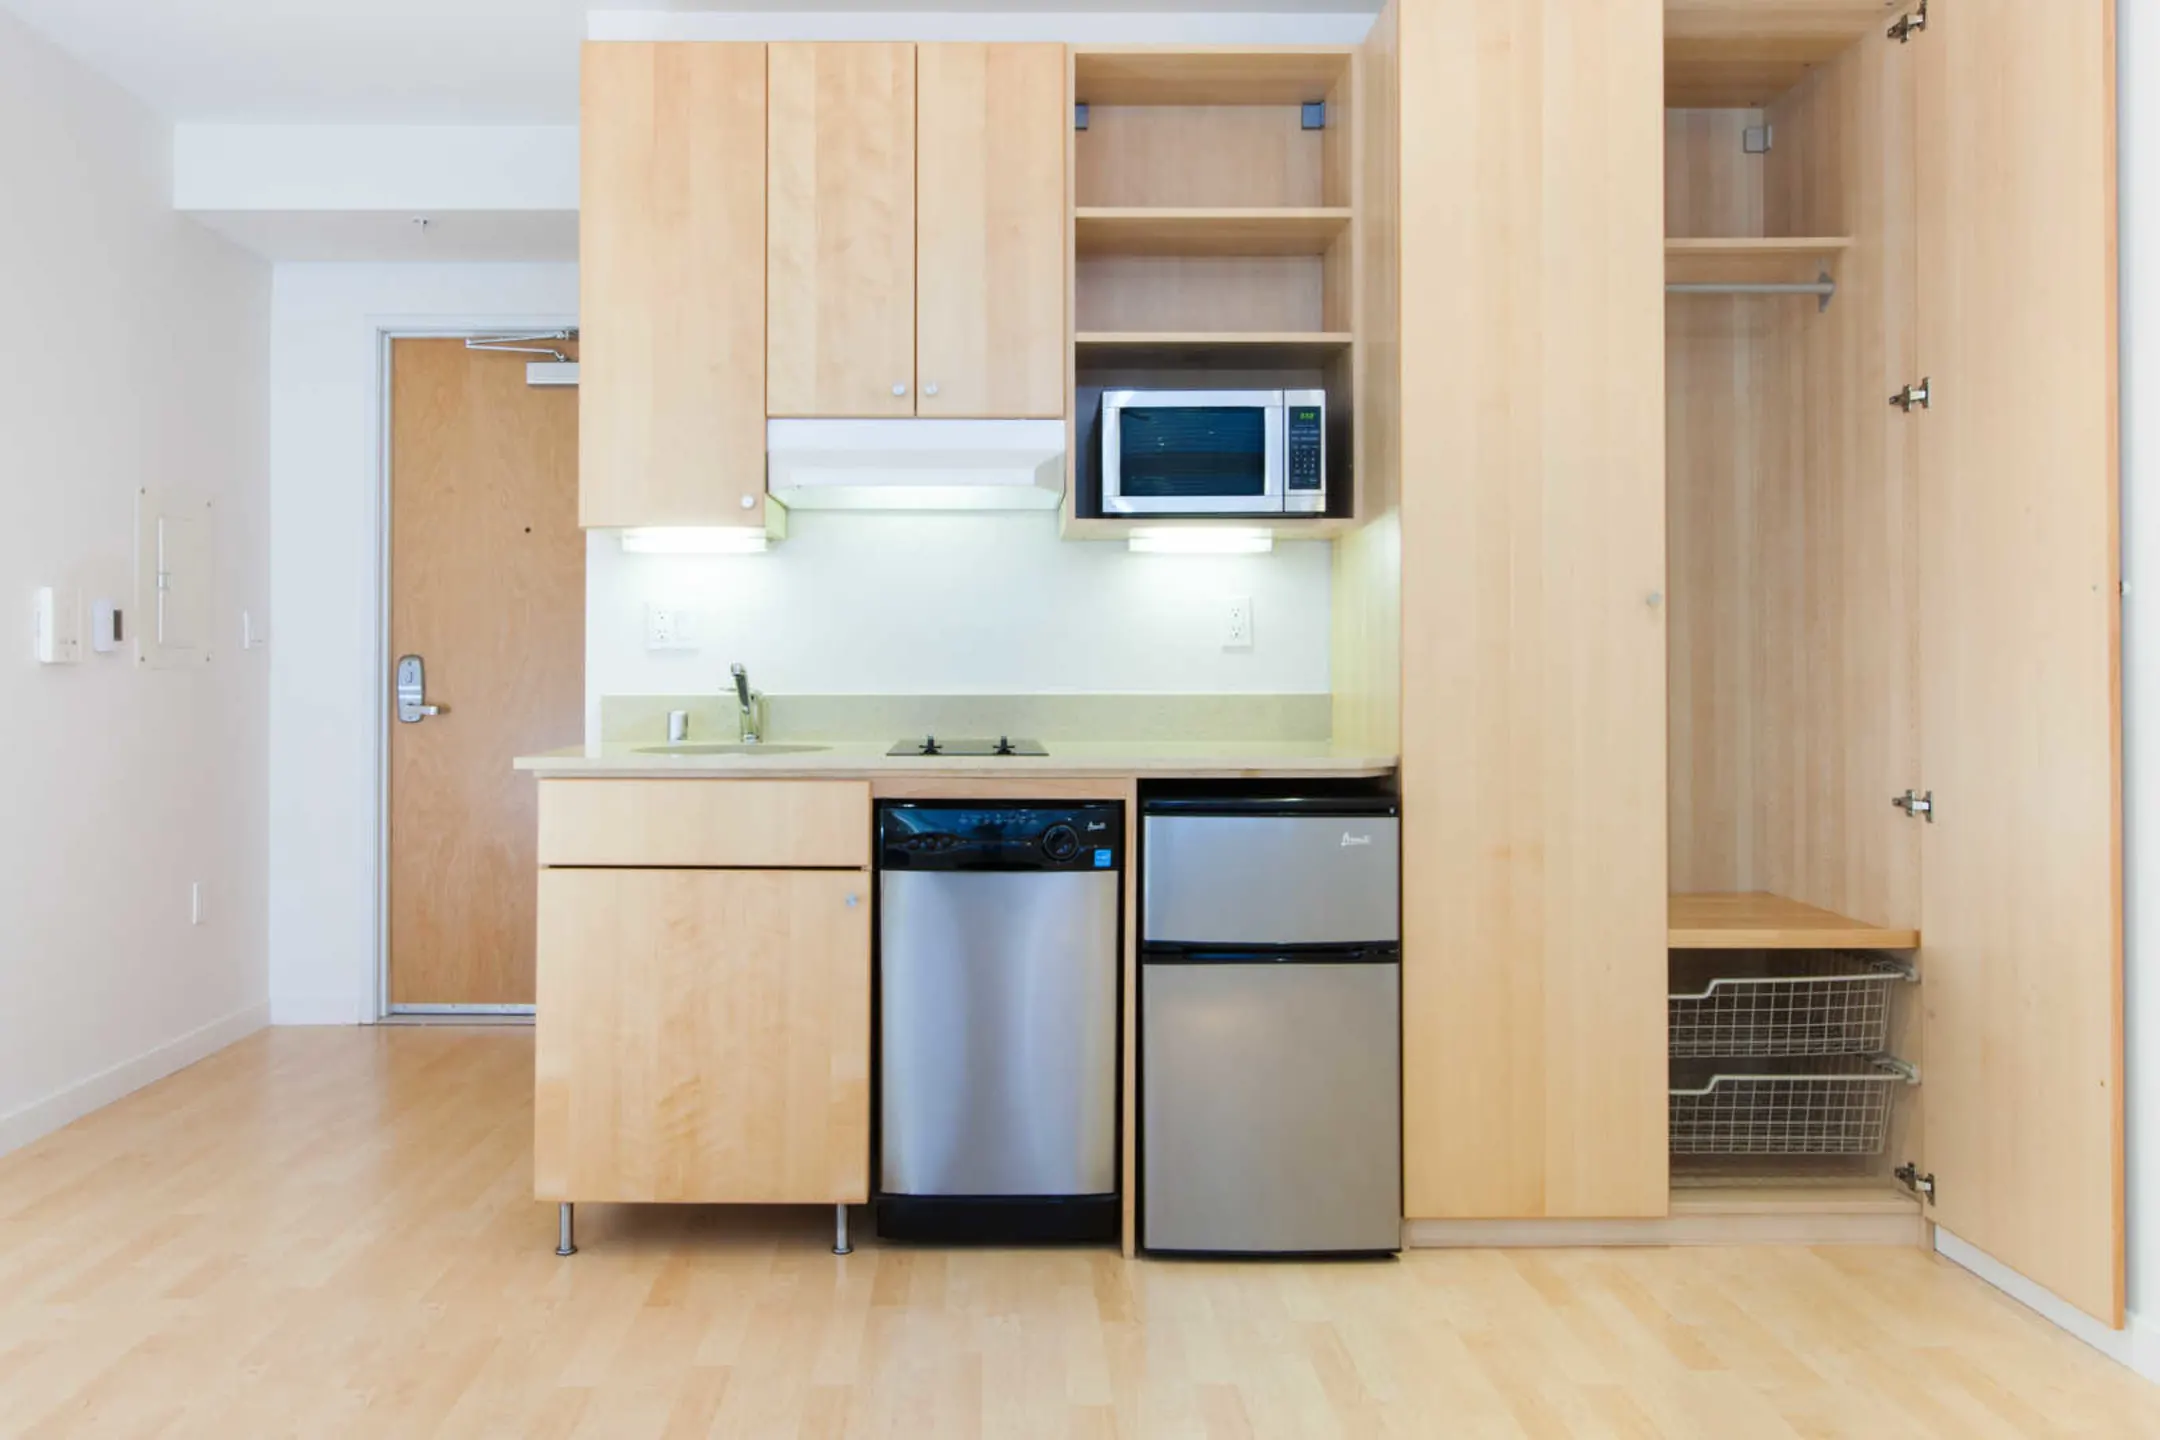 Kitchen - 77 Bluxome Apartments - San Francisco, CA